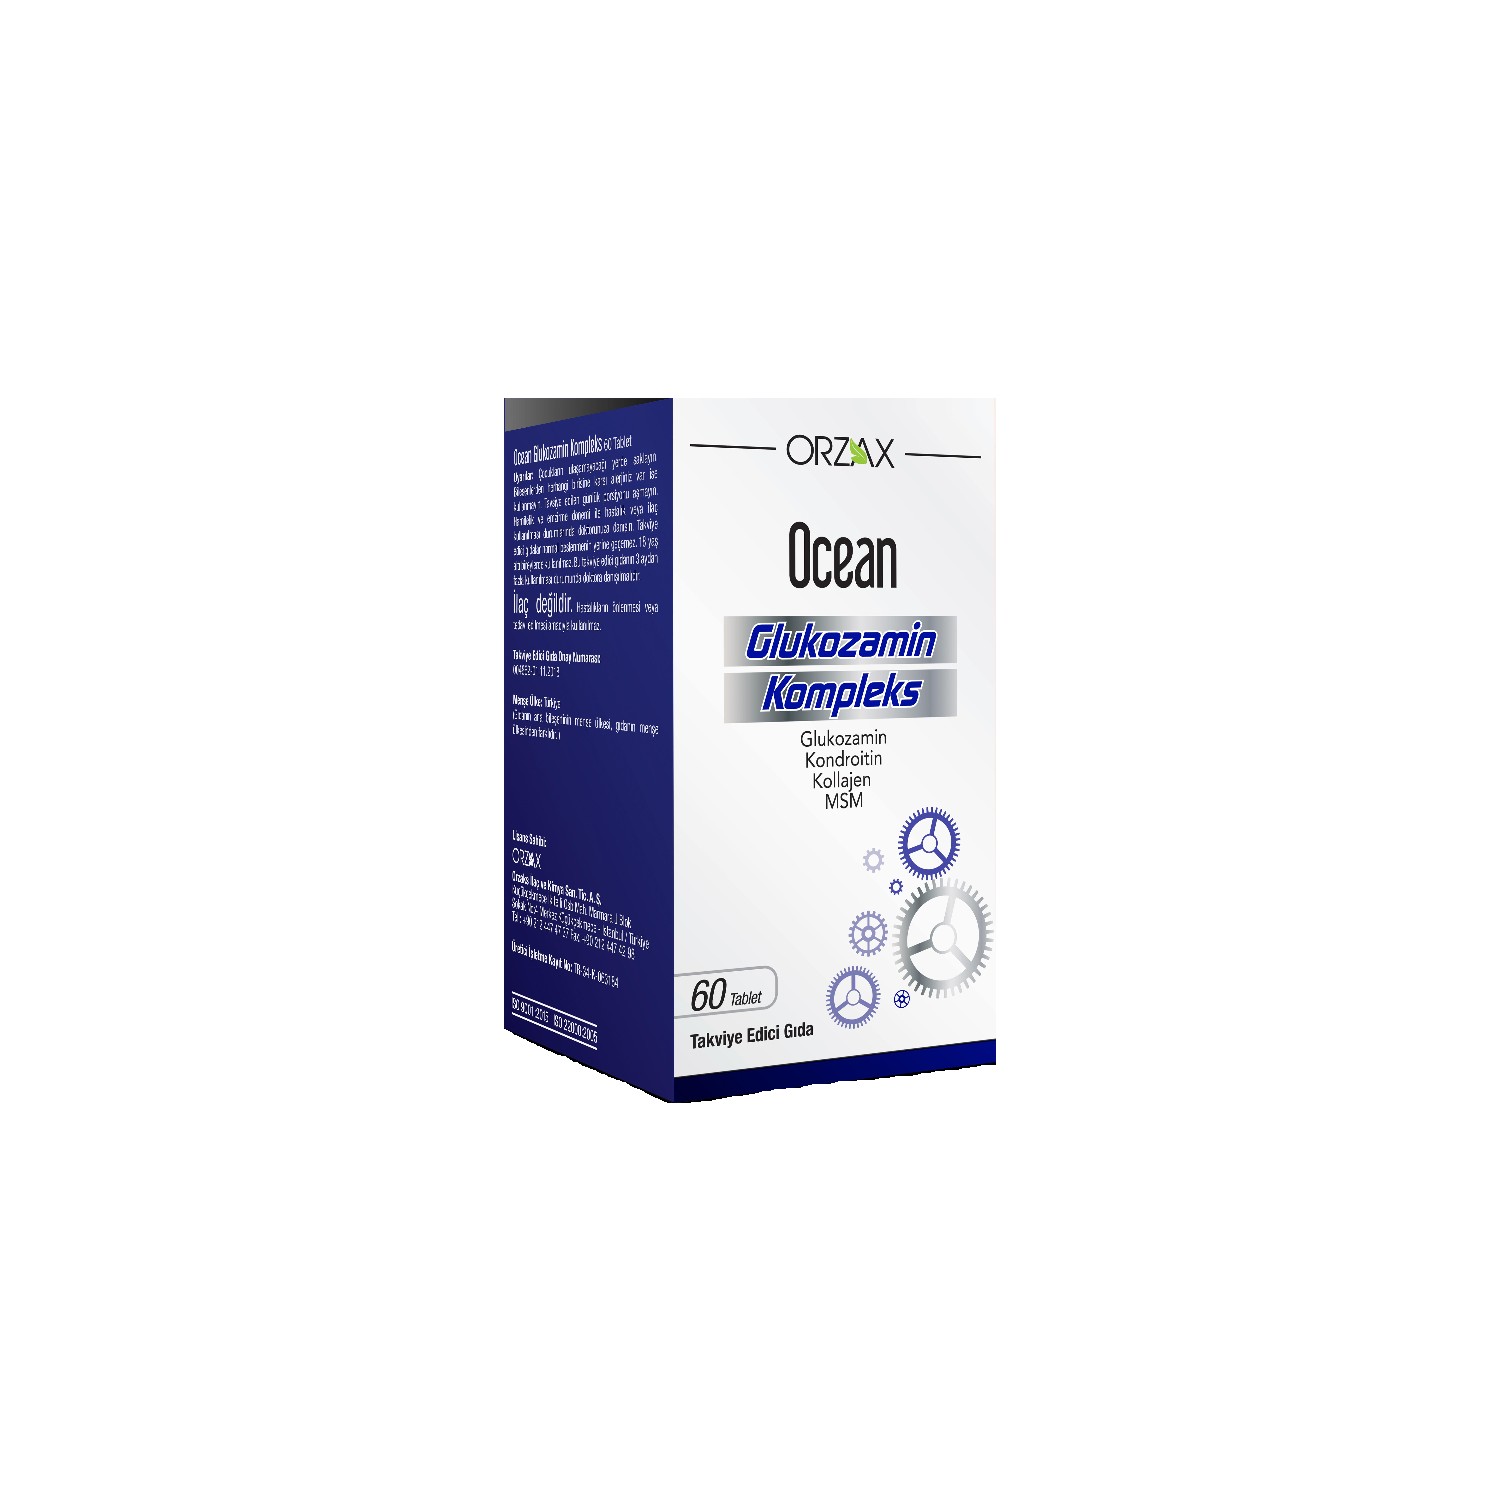 Комплекс глюкозамина Ocean комплекс глюкозамина ocean 2 упаковки по 60 таблеток